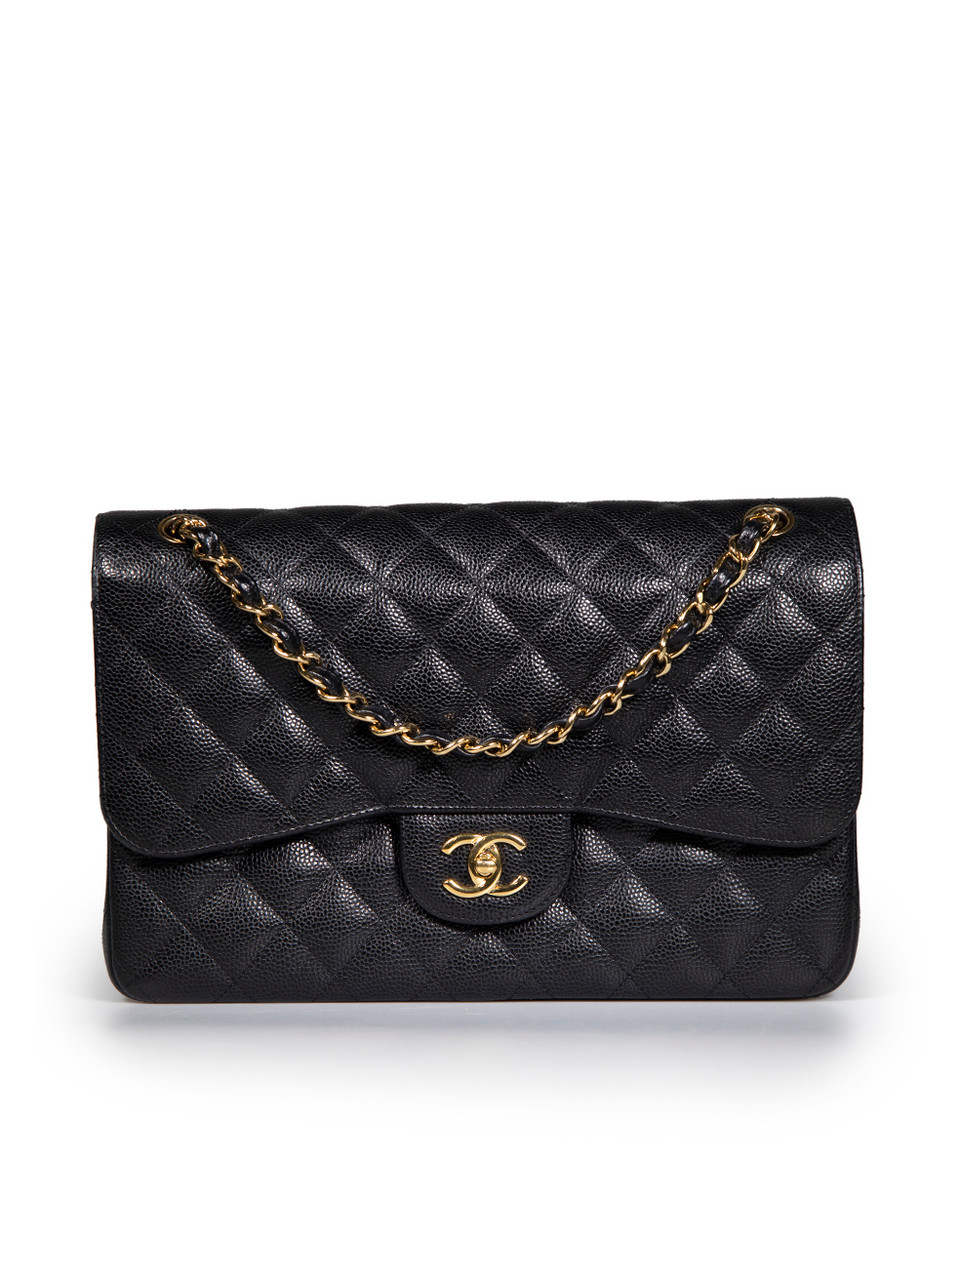 Chanel 2014 Black Caviar Leather Jumbo Double Flap Bag